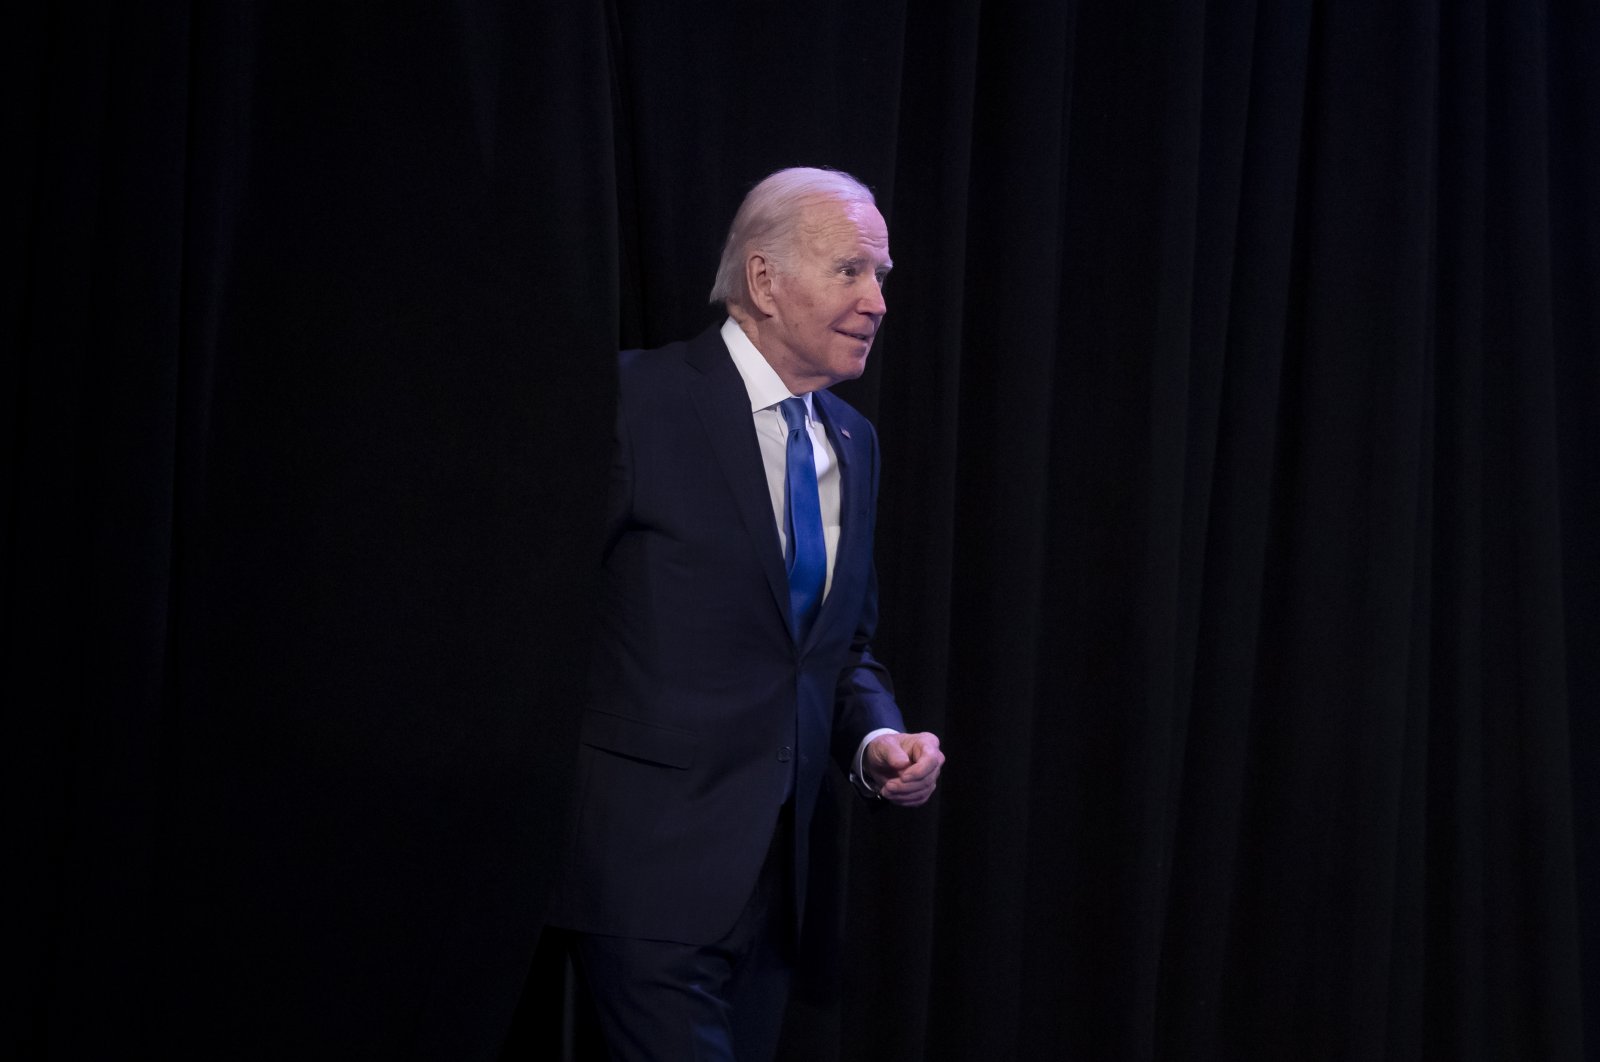 U.S. President Joe Biden arrives at a program in Washington, D.C., U.S., Feb. 14, 2023. (EPA Photo)